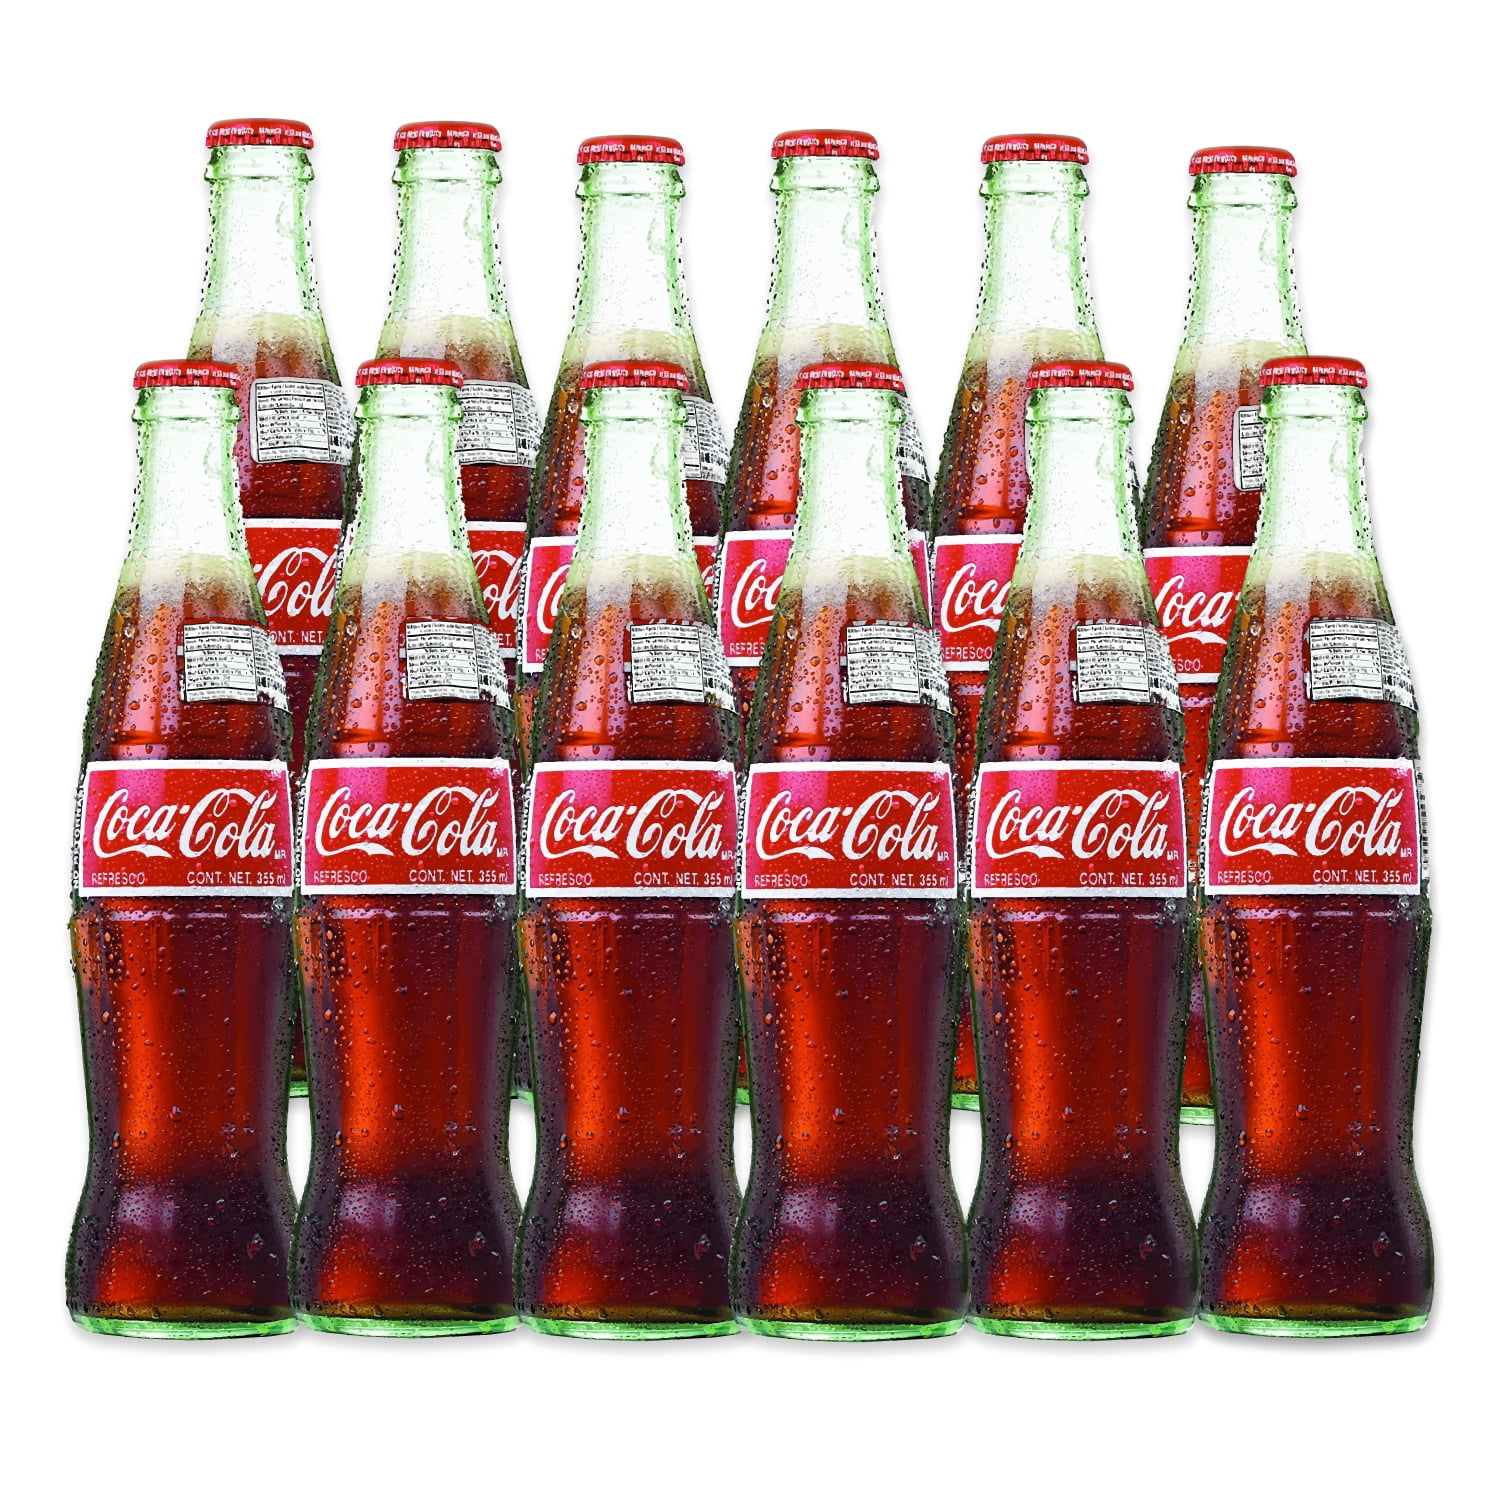 Coke Mini Mexican Glass Mini Bottle 235ml